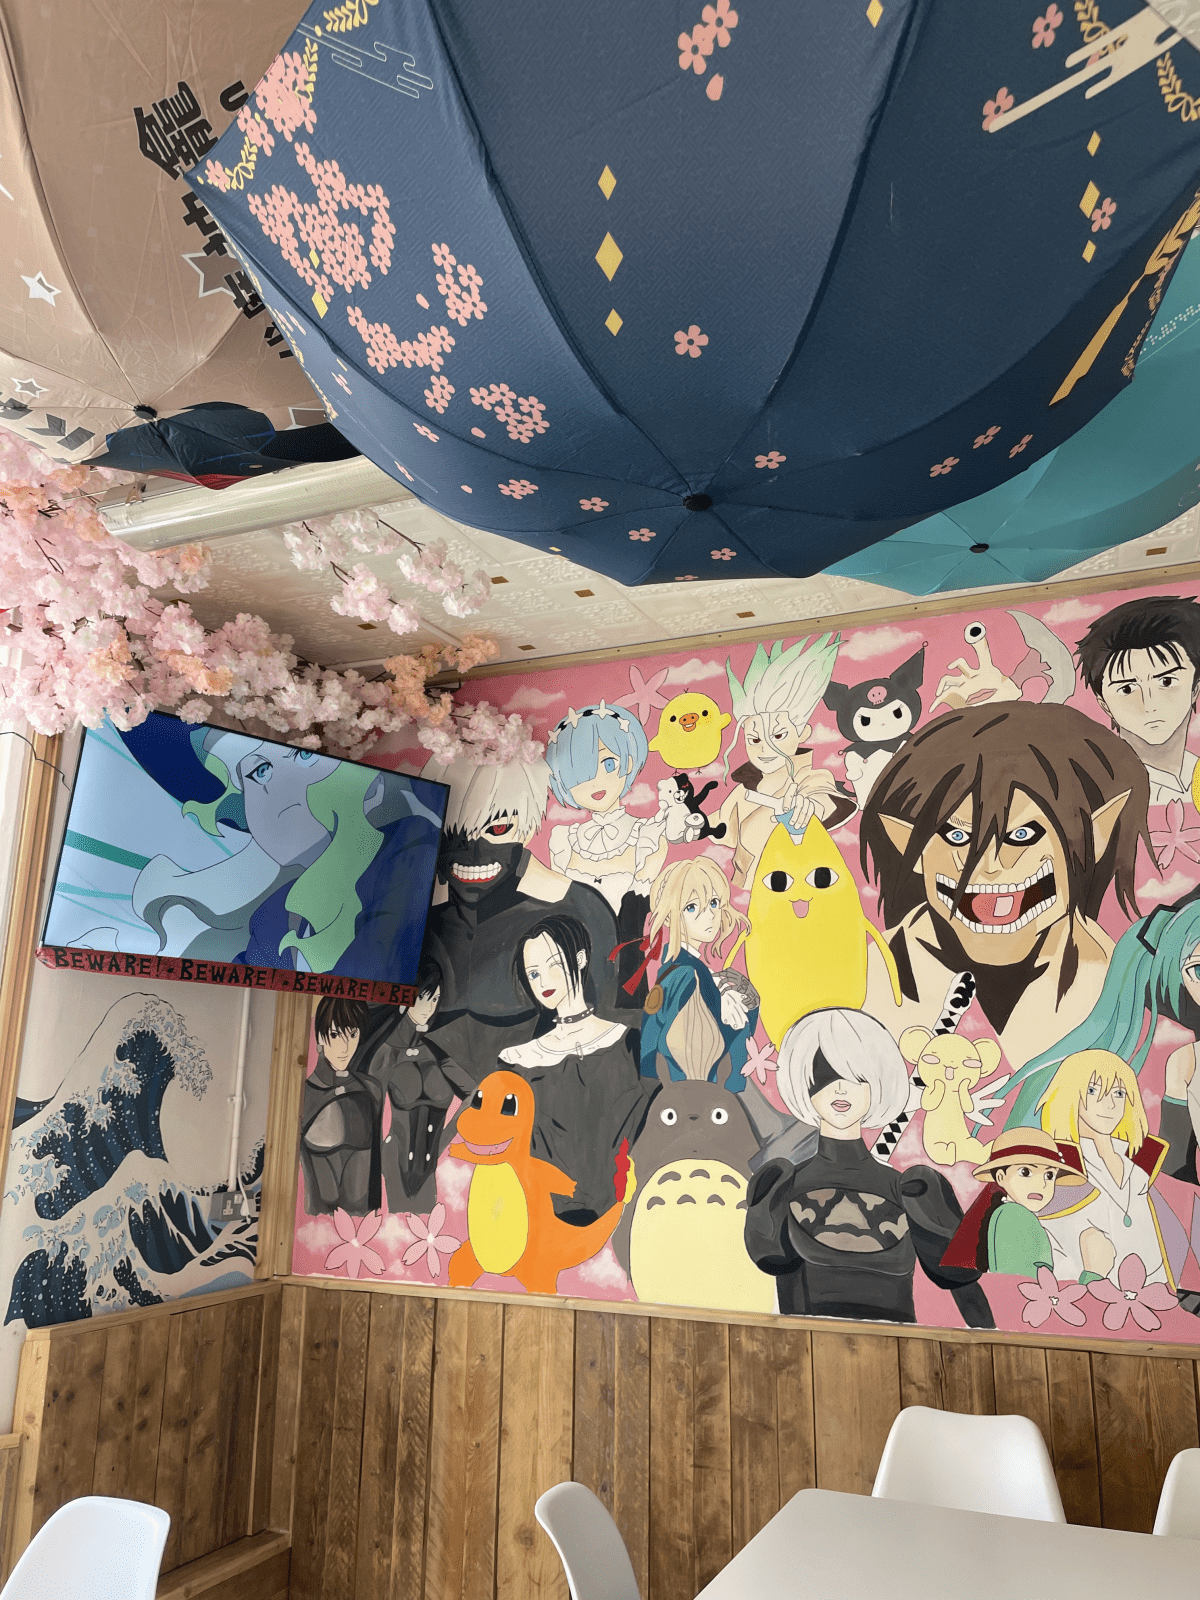 The Japanese Anime cafe with real maids hidden inside Afflecks, The Manc